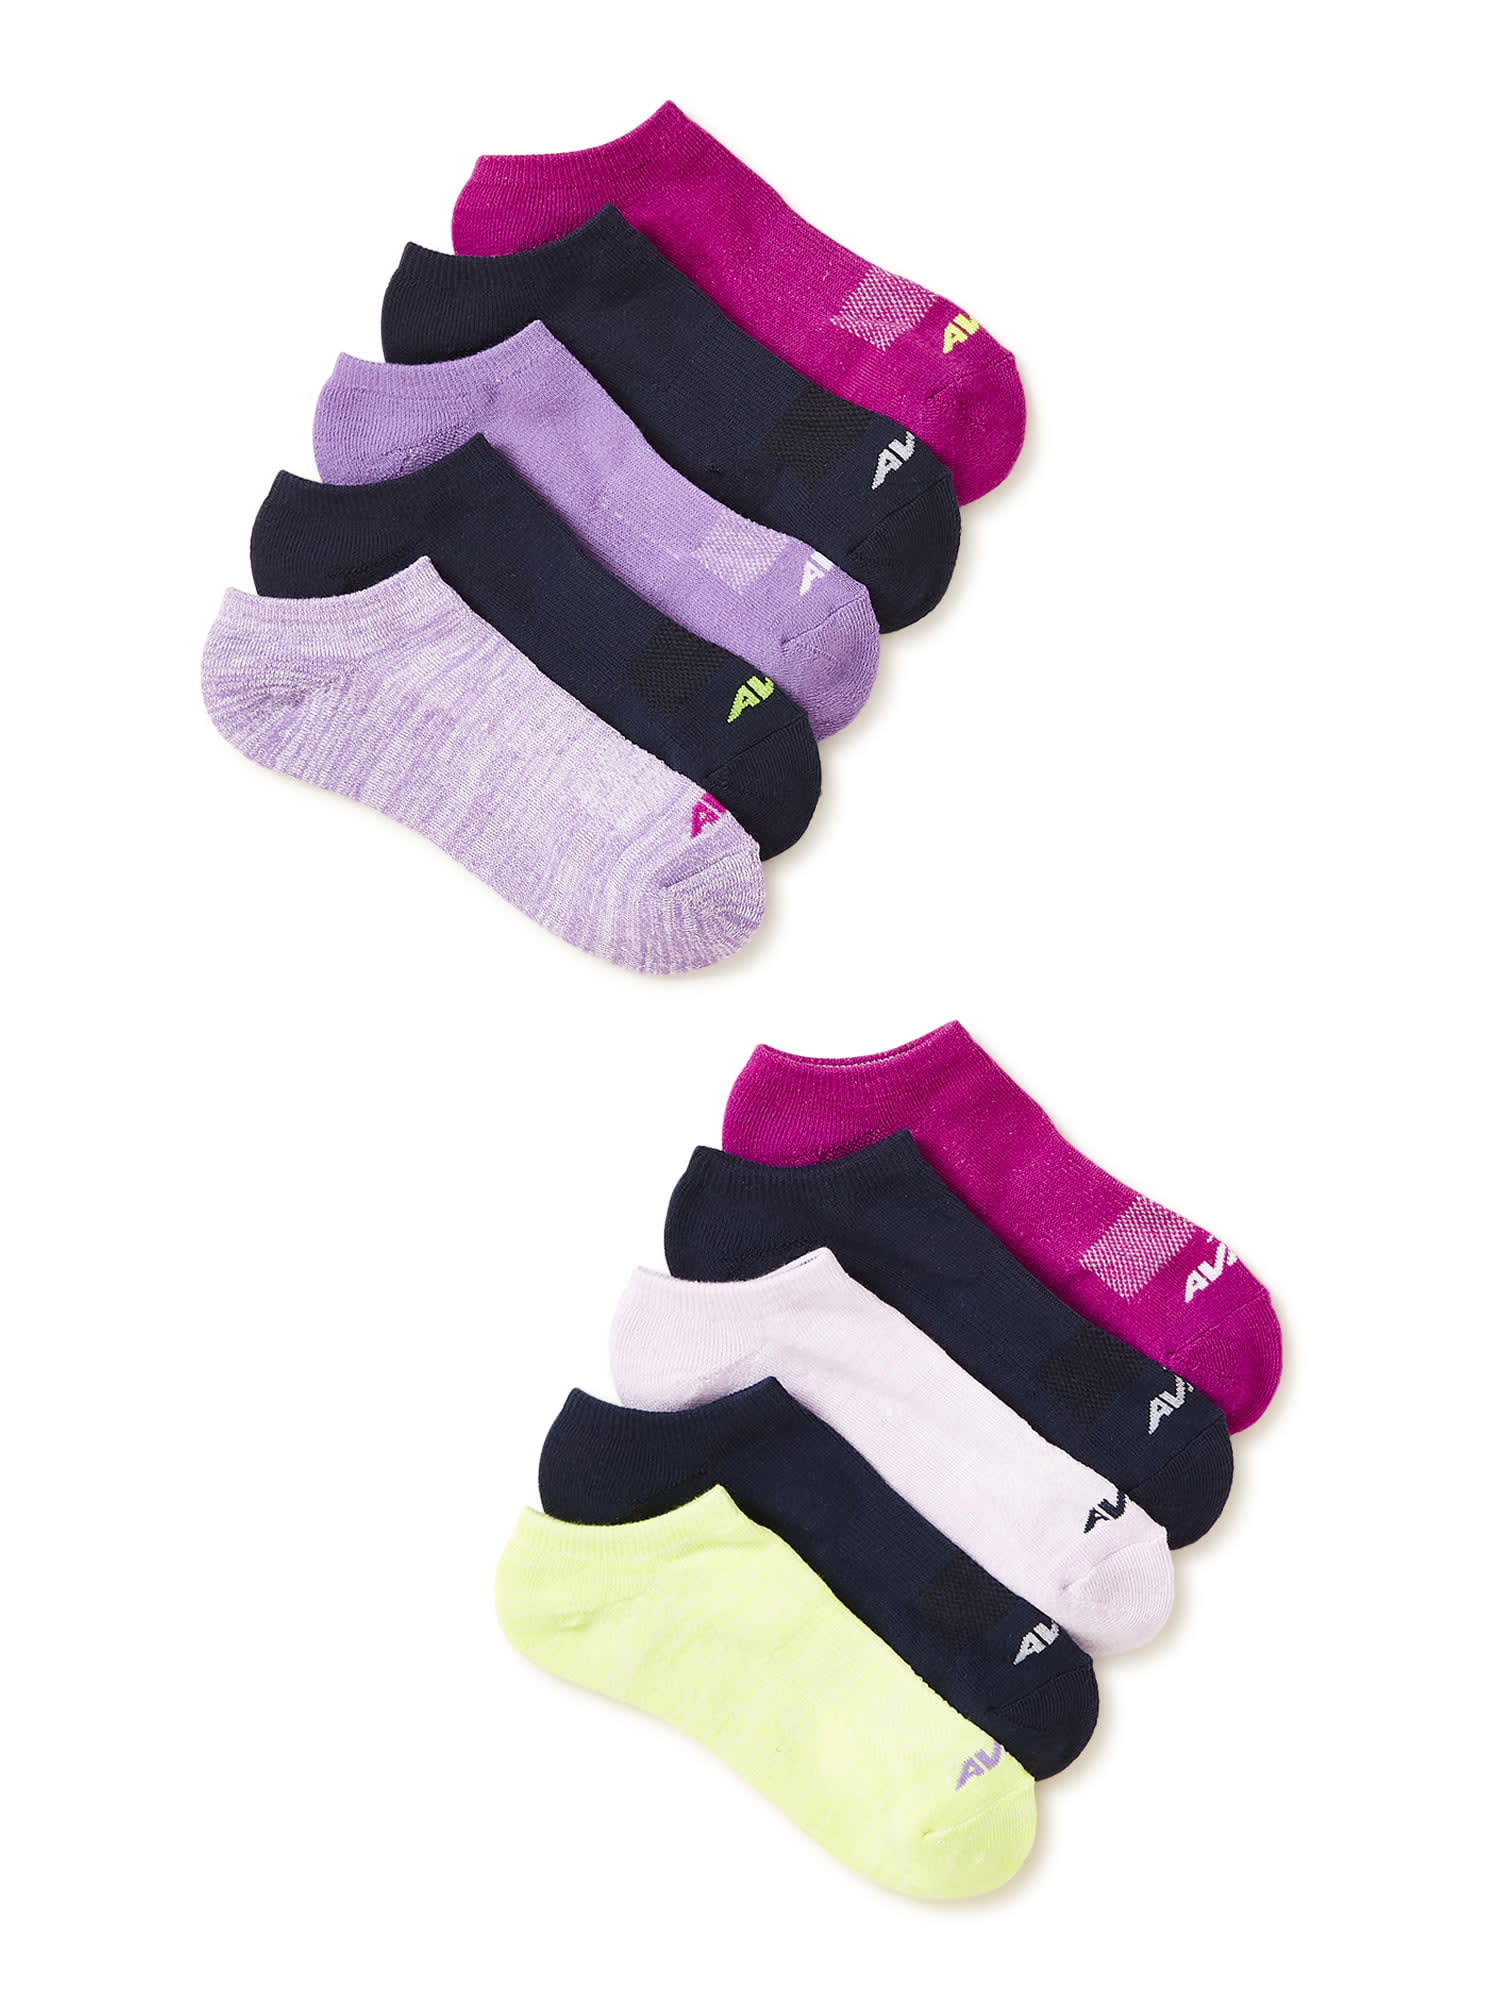 Gaiam Evolve Grippy Yoga Sock (2 Pack) at